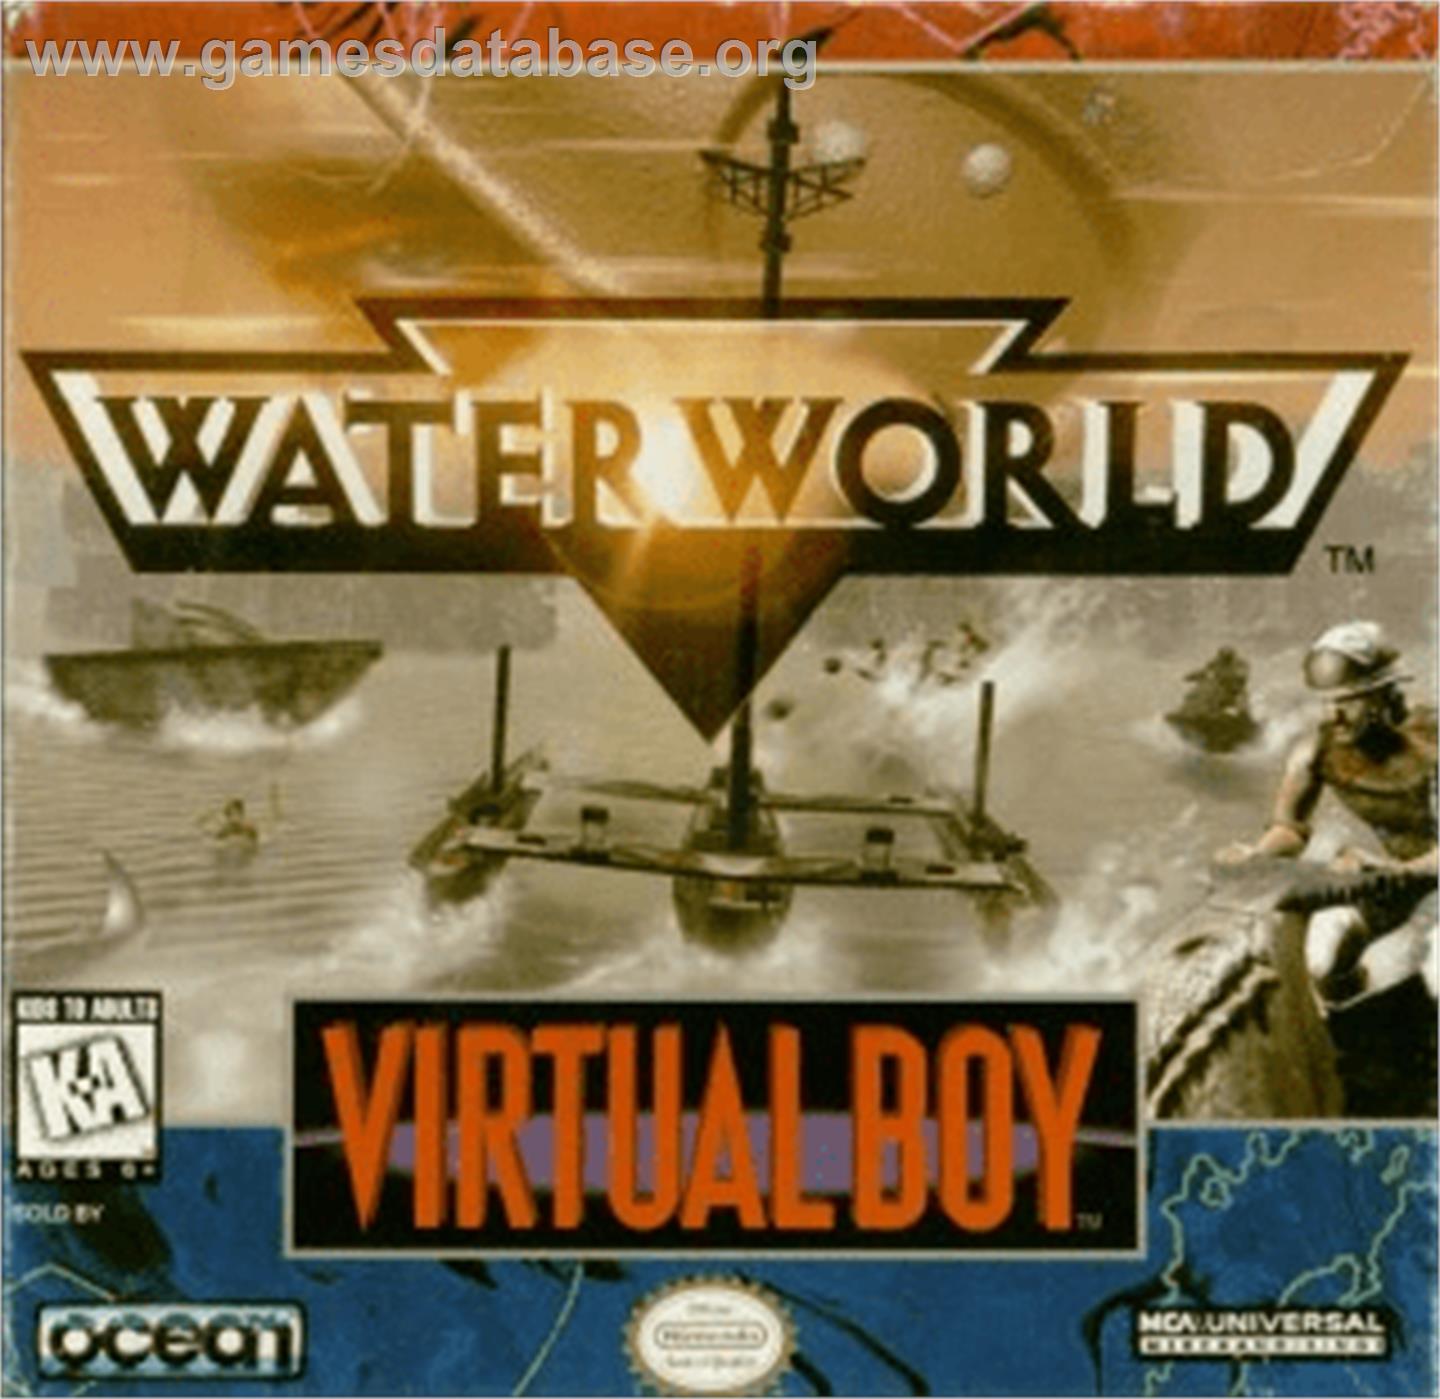 Waterworld - Nintendo Virtual Boy - Artwork - Box